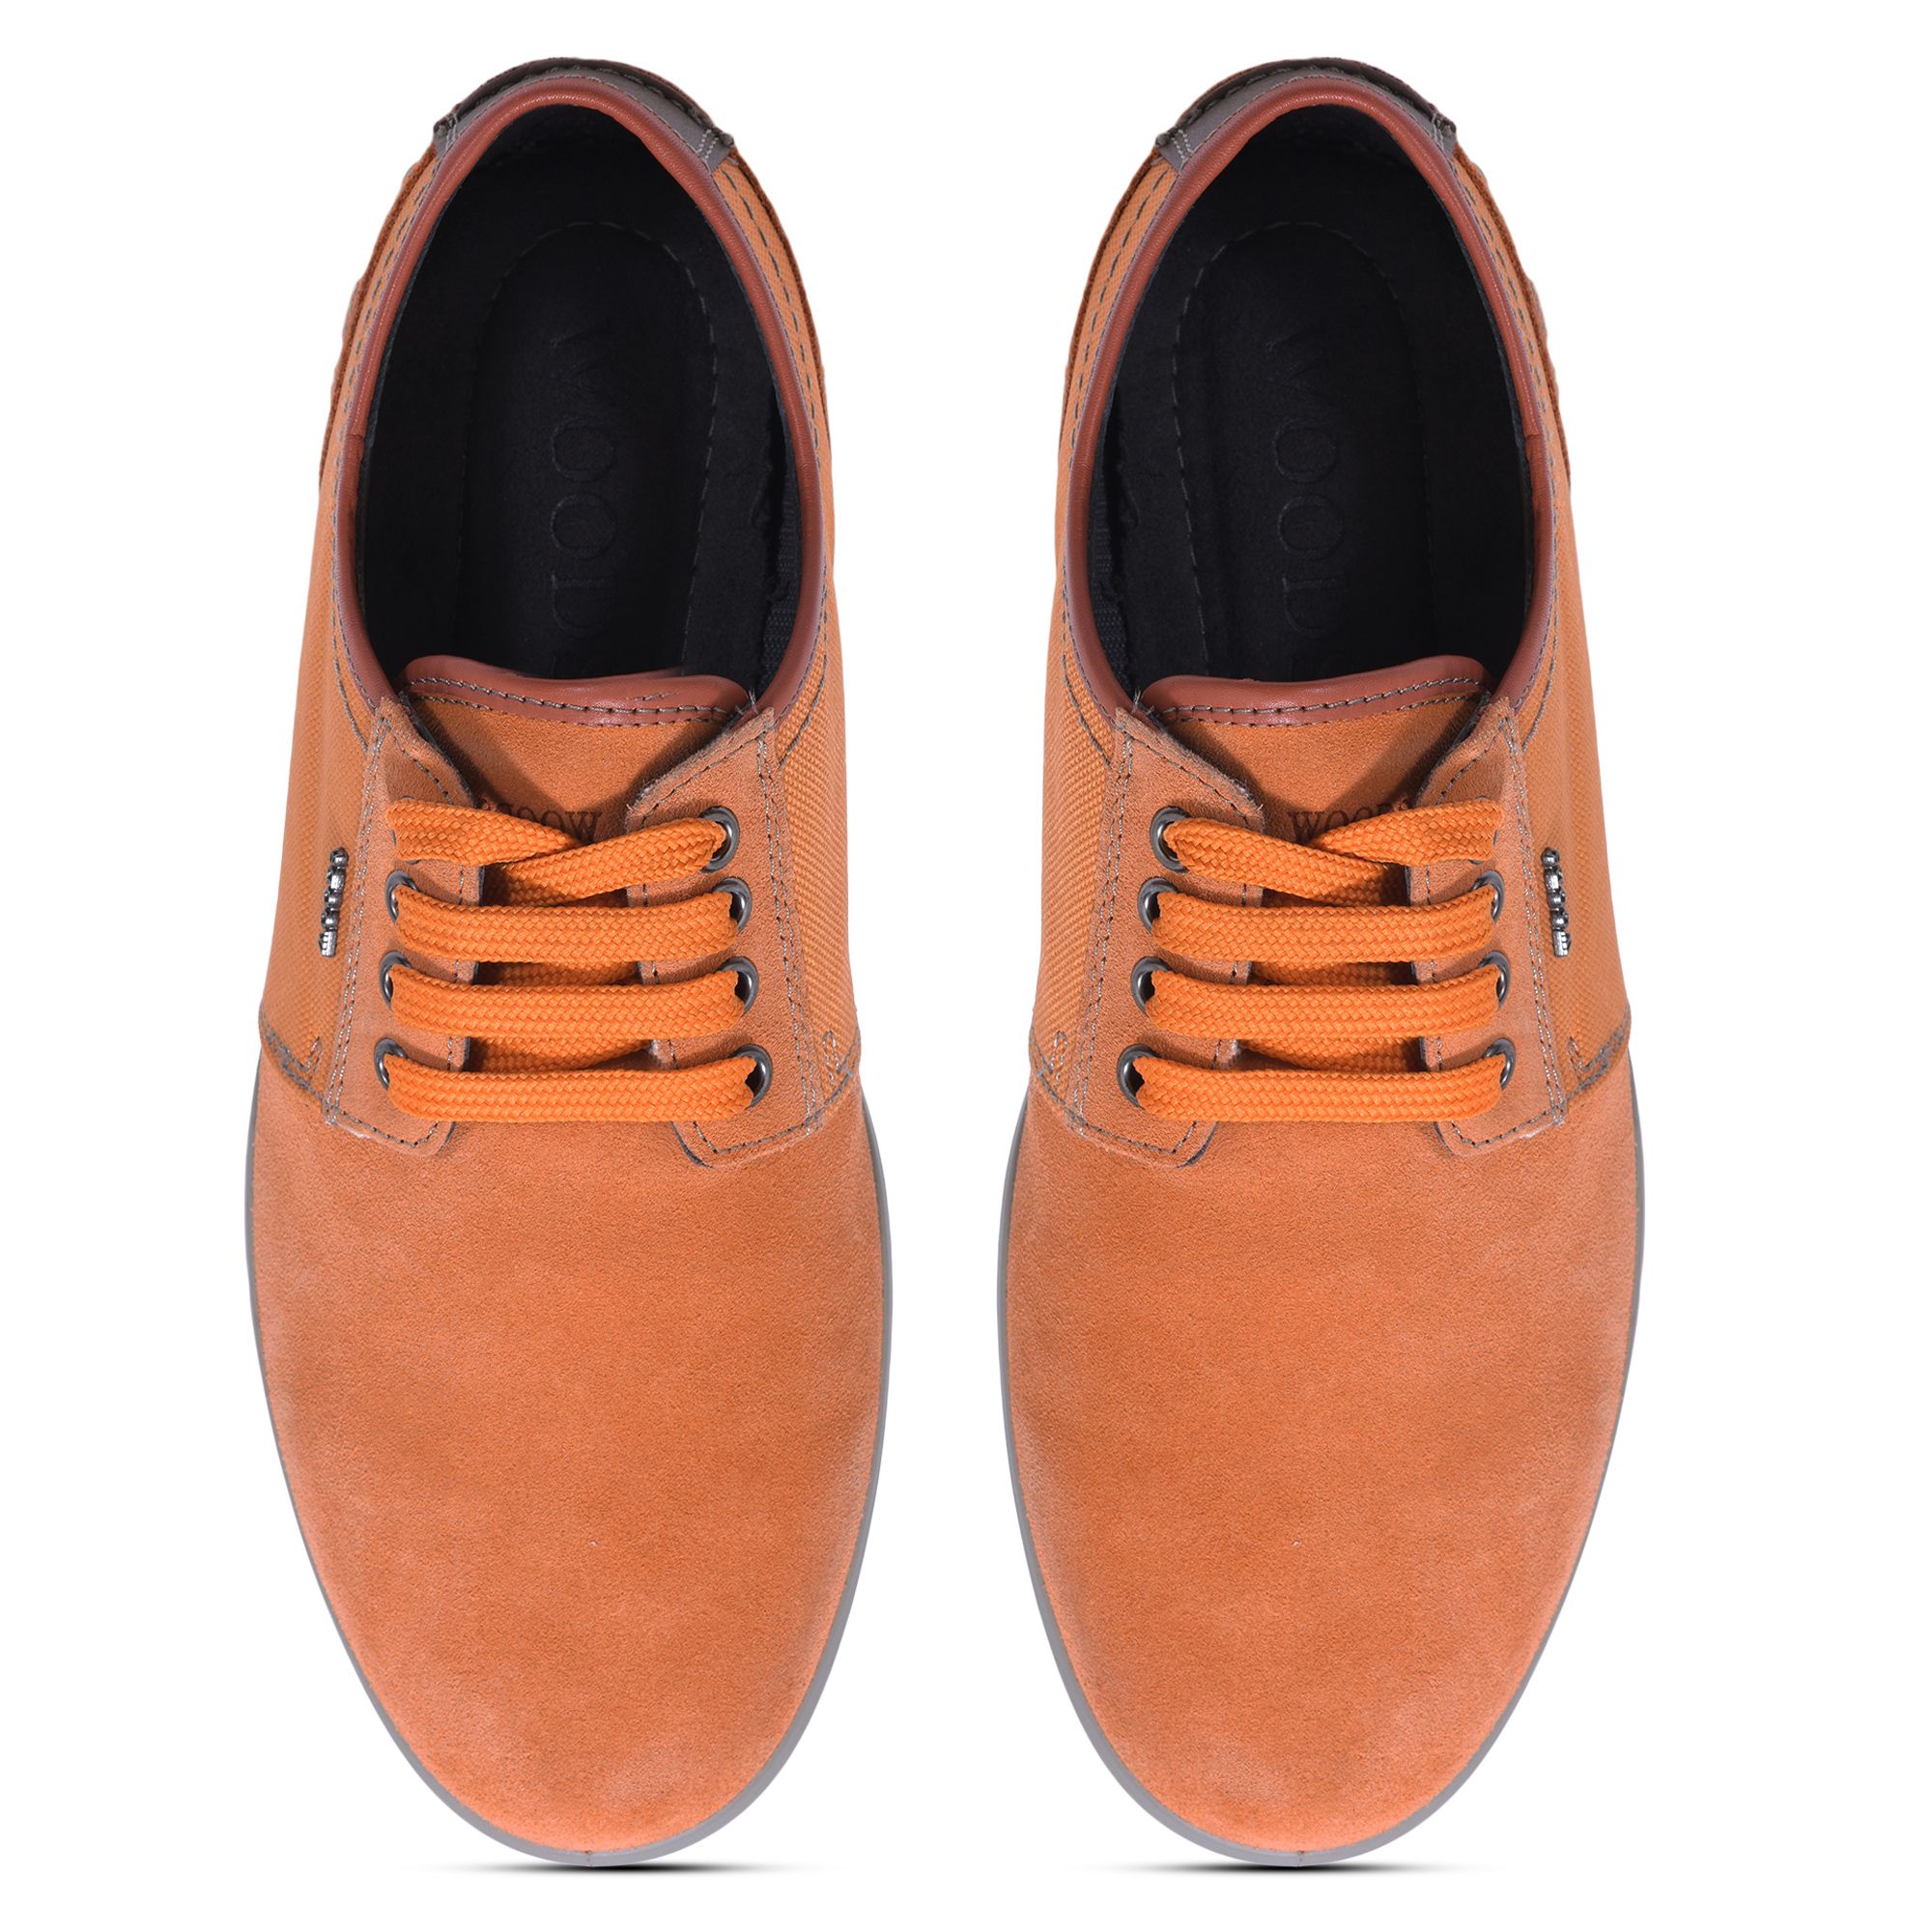 Orange casual sneaker